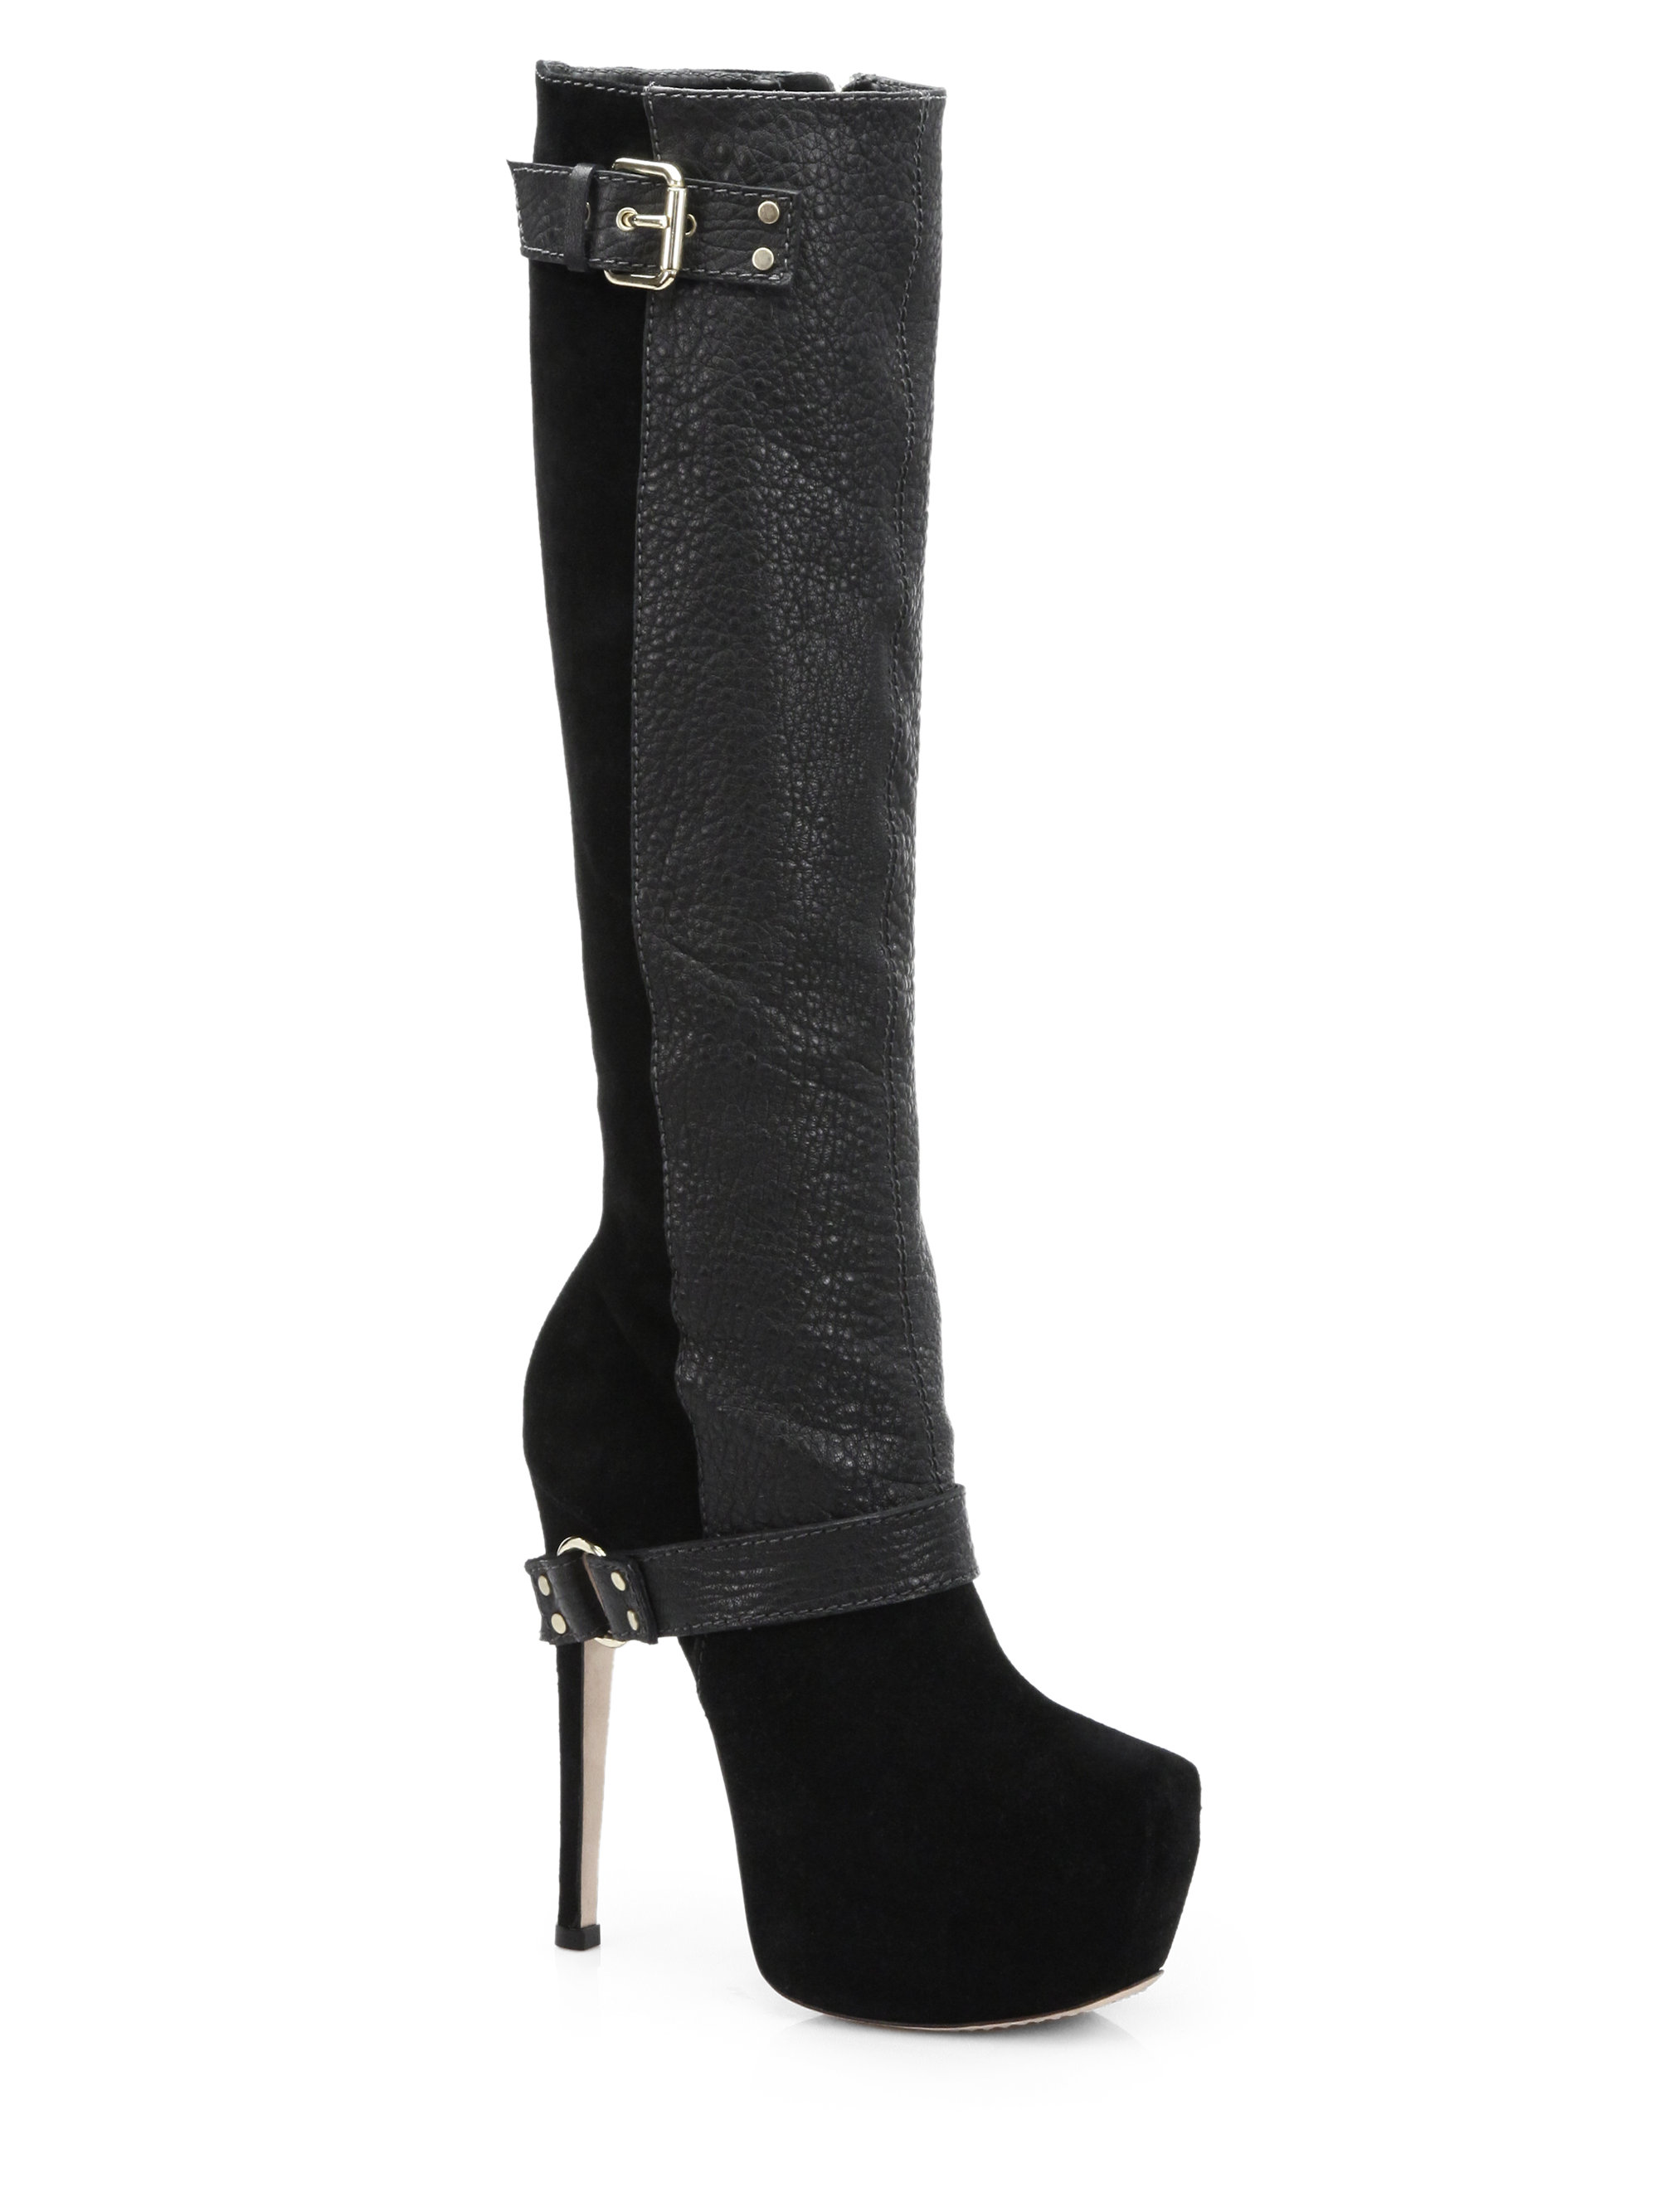 Alice + Olivia Laverna Leather Suede Platform Boots in Black | Lyst